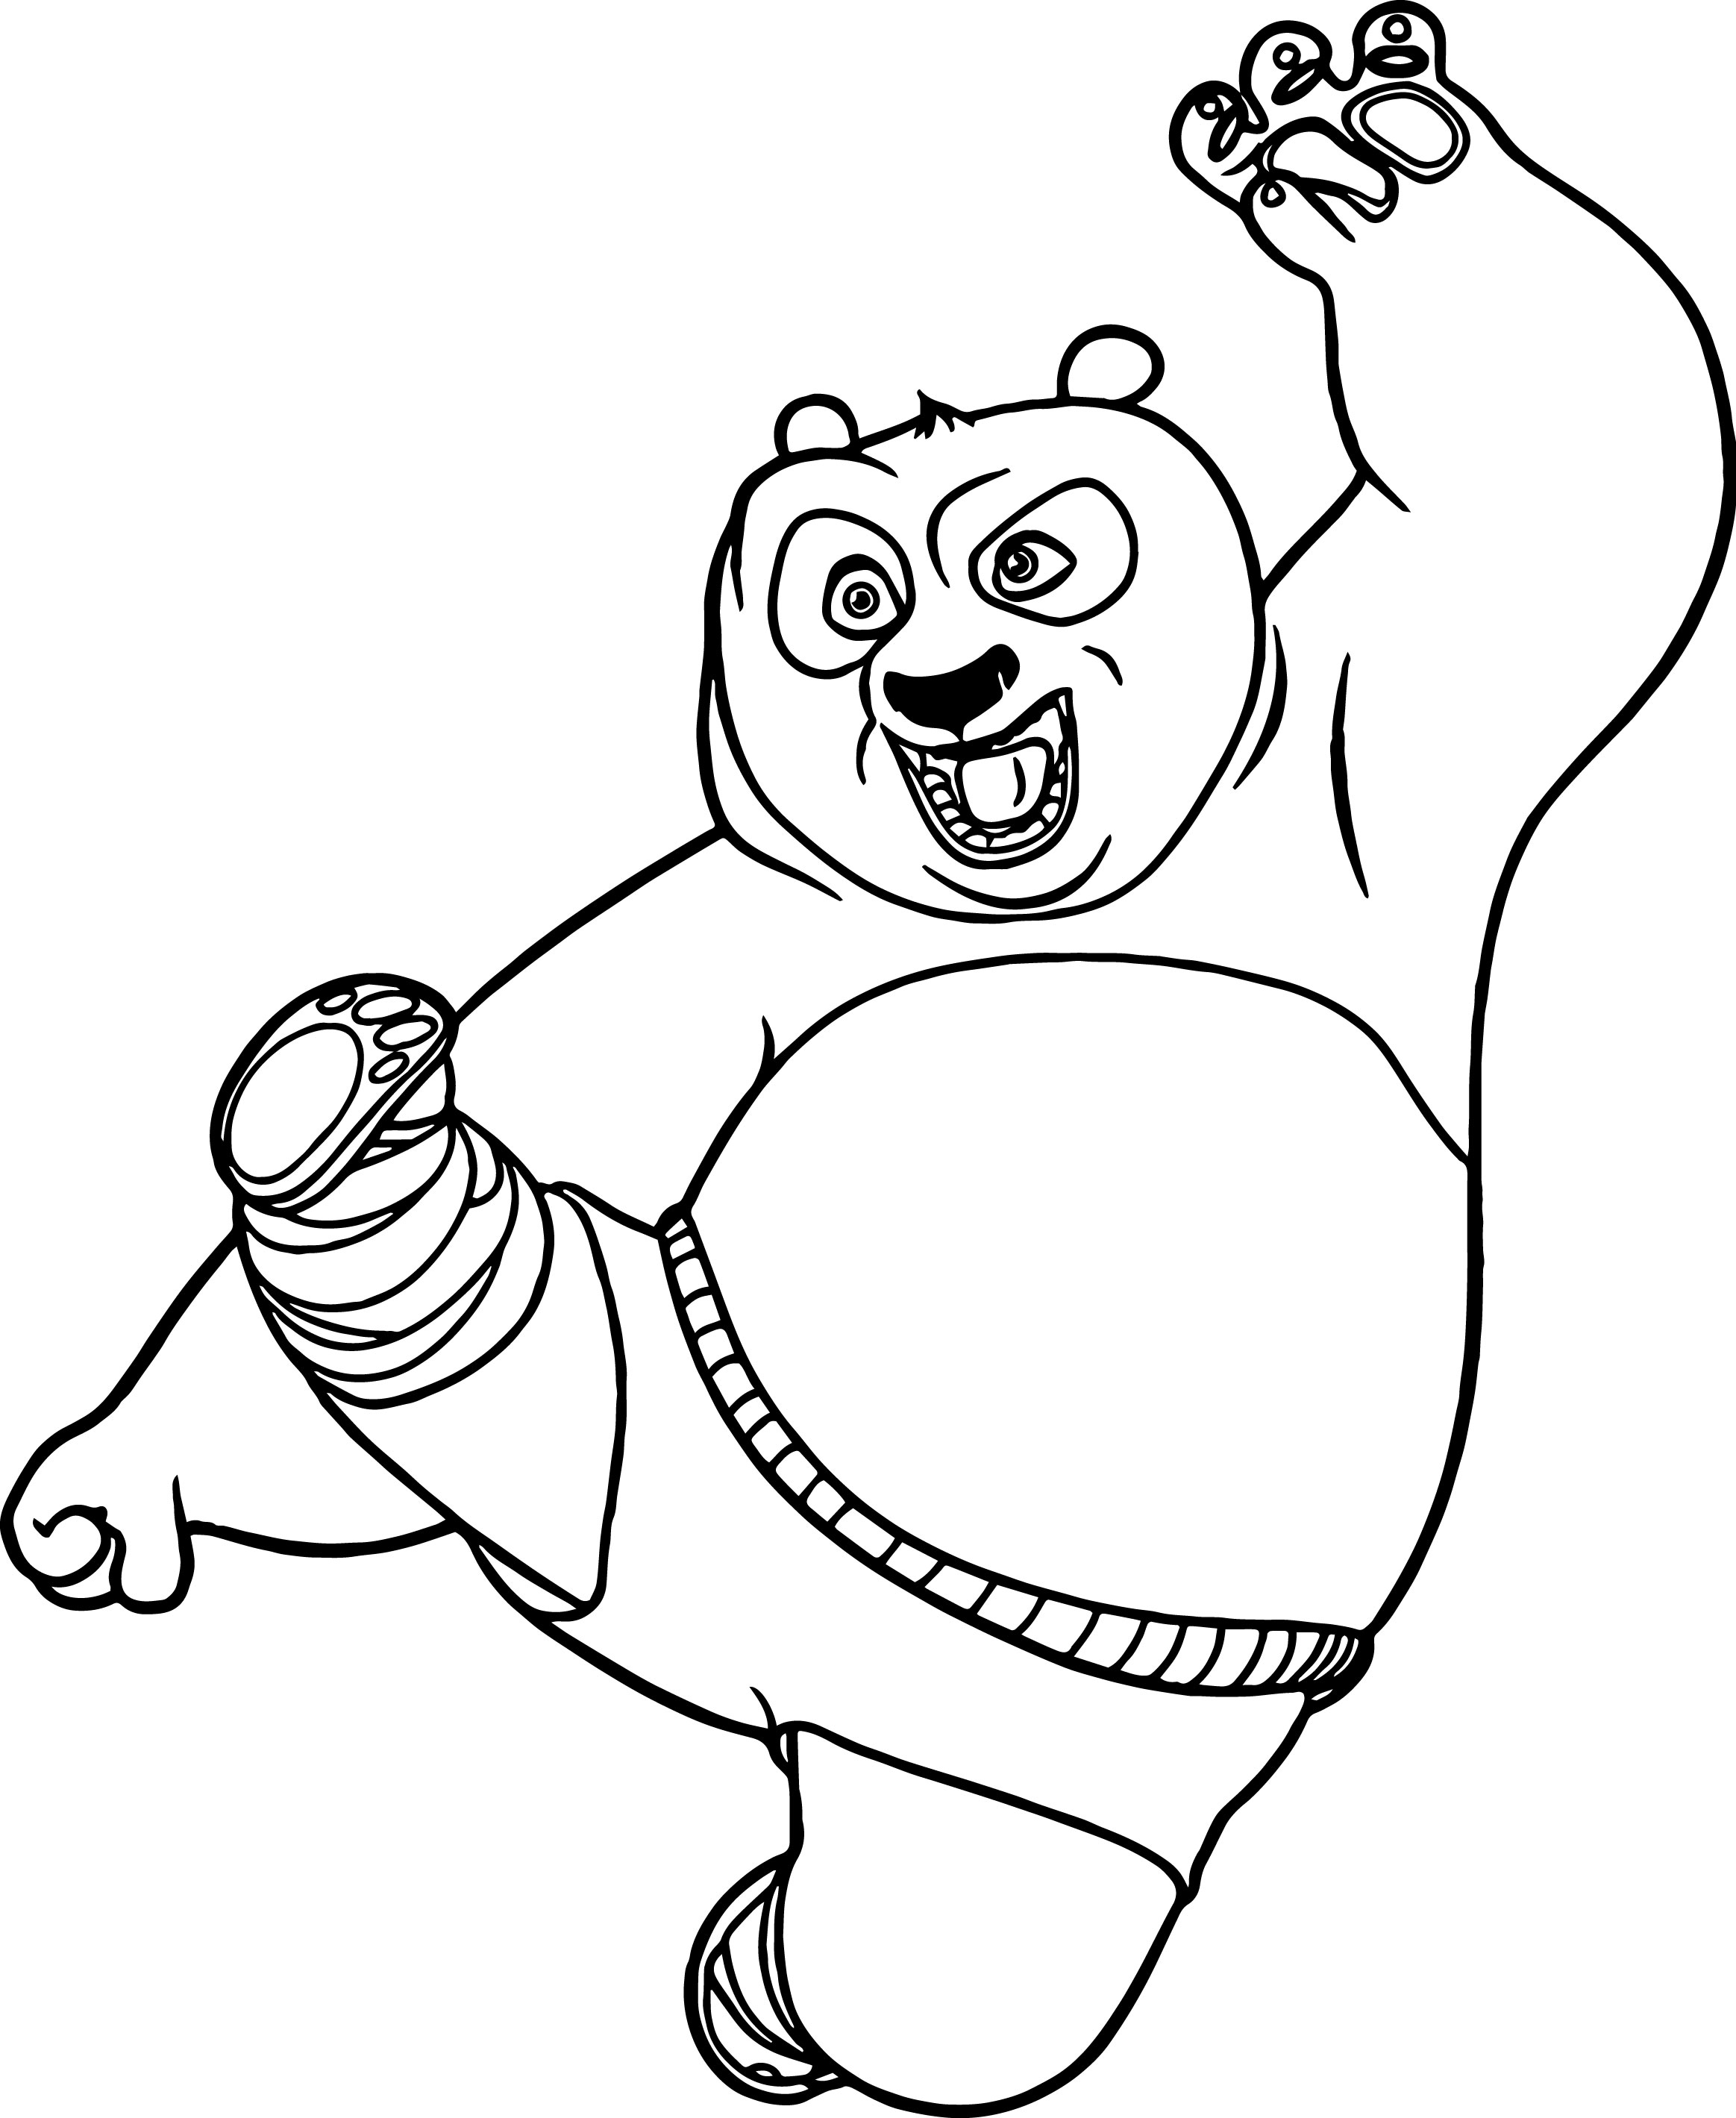 Kung Fu Panda Kick Coloring Page | Wecoloringpage.com